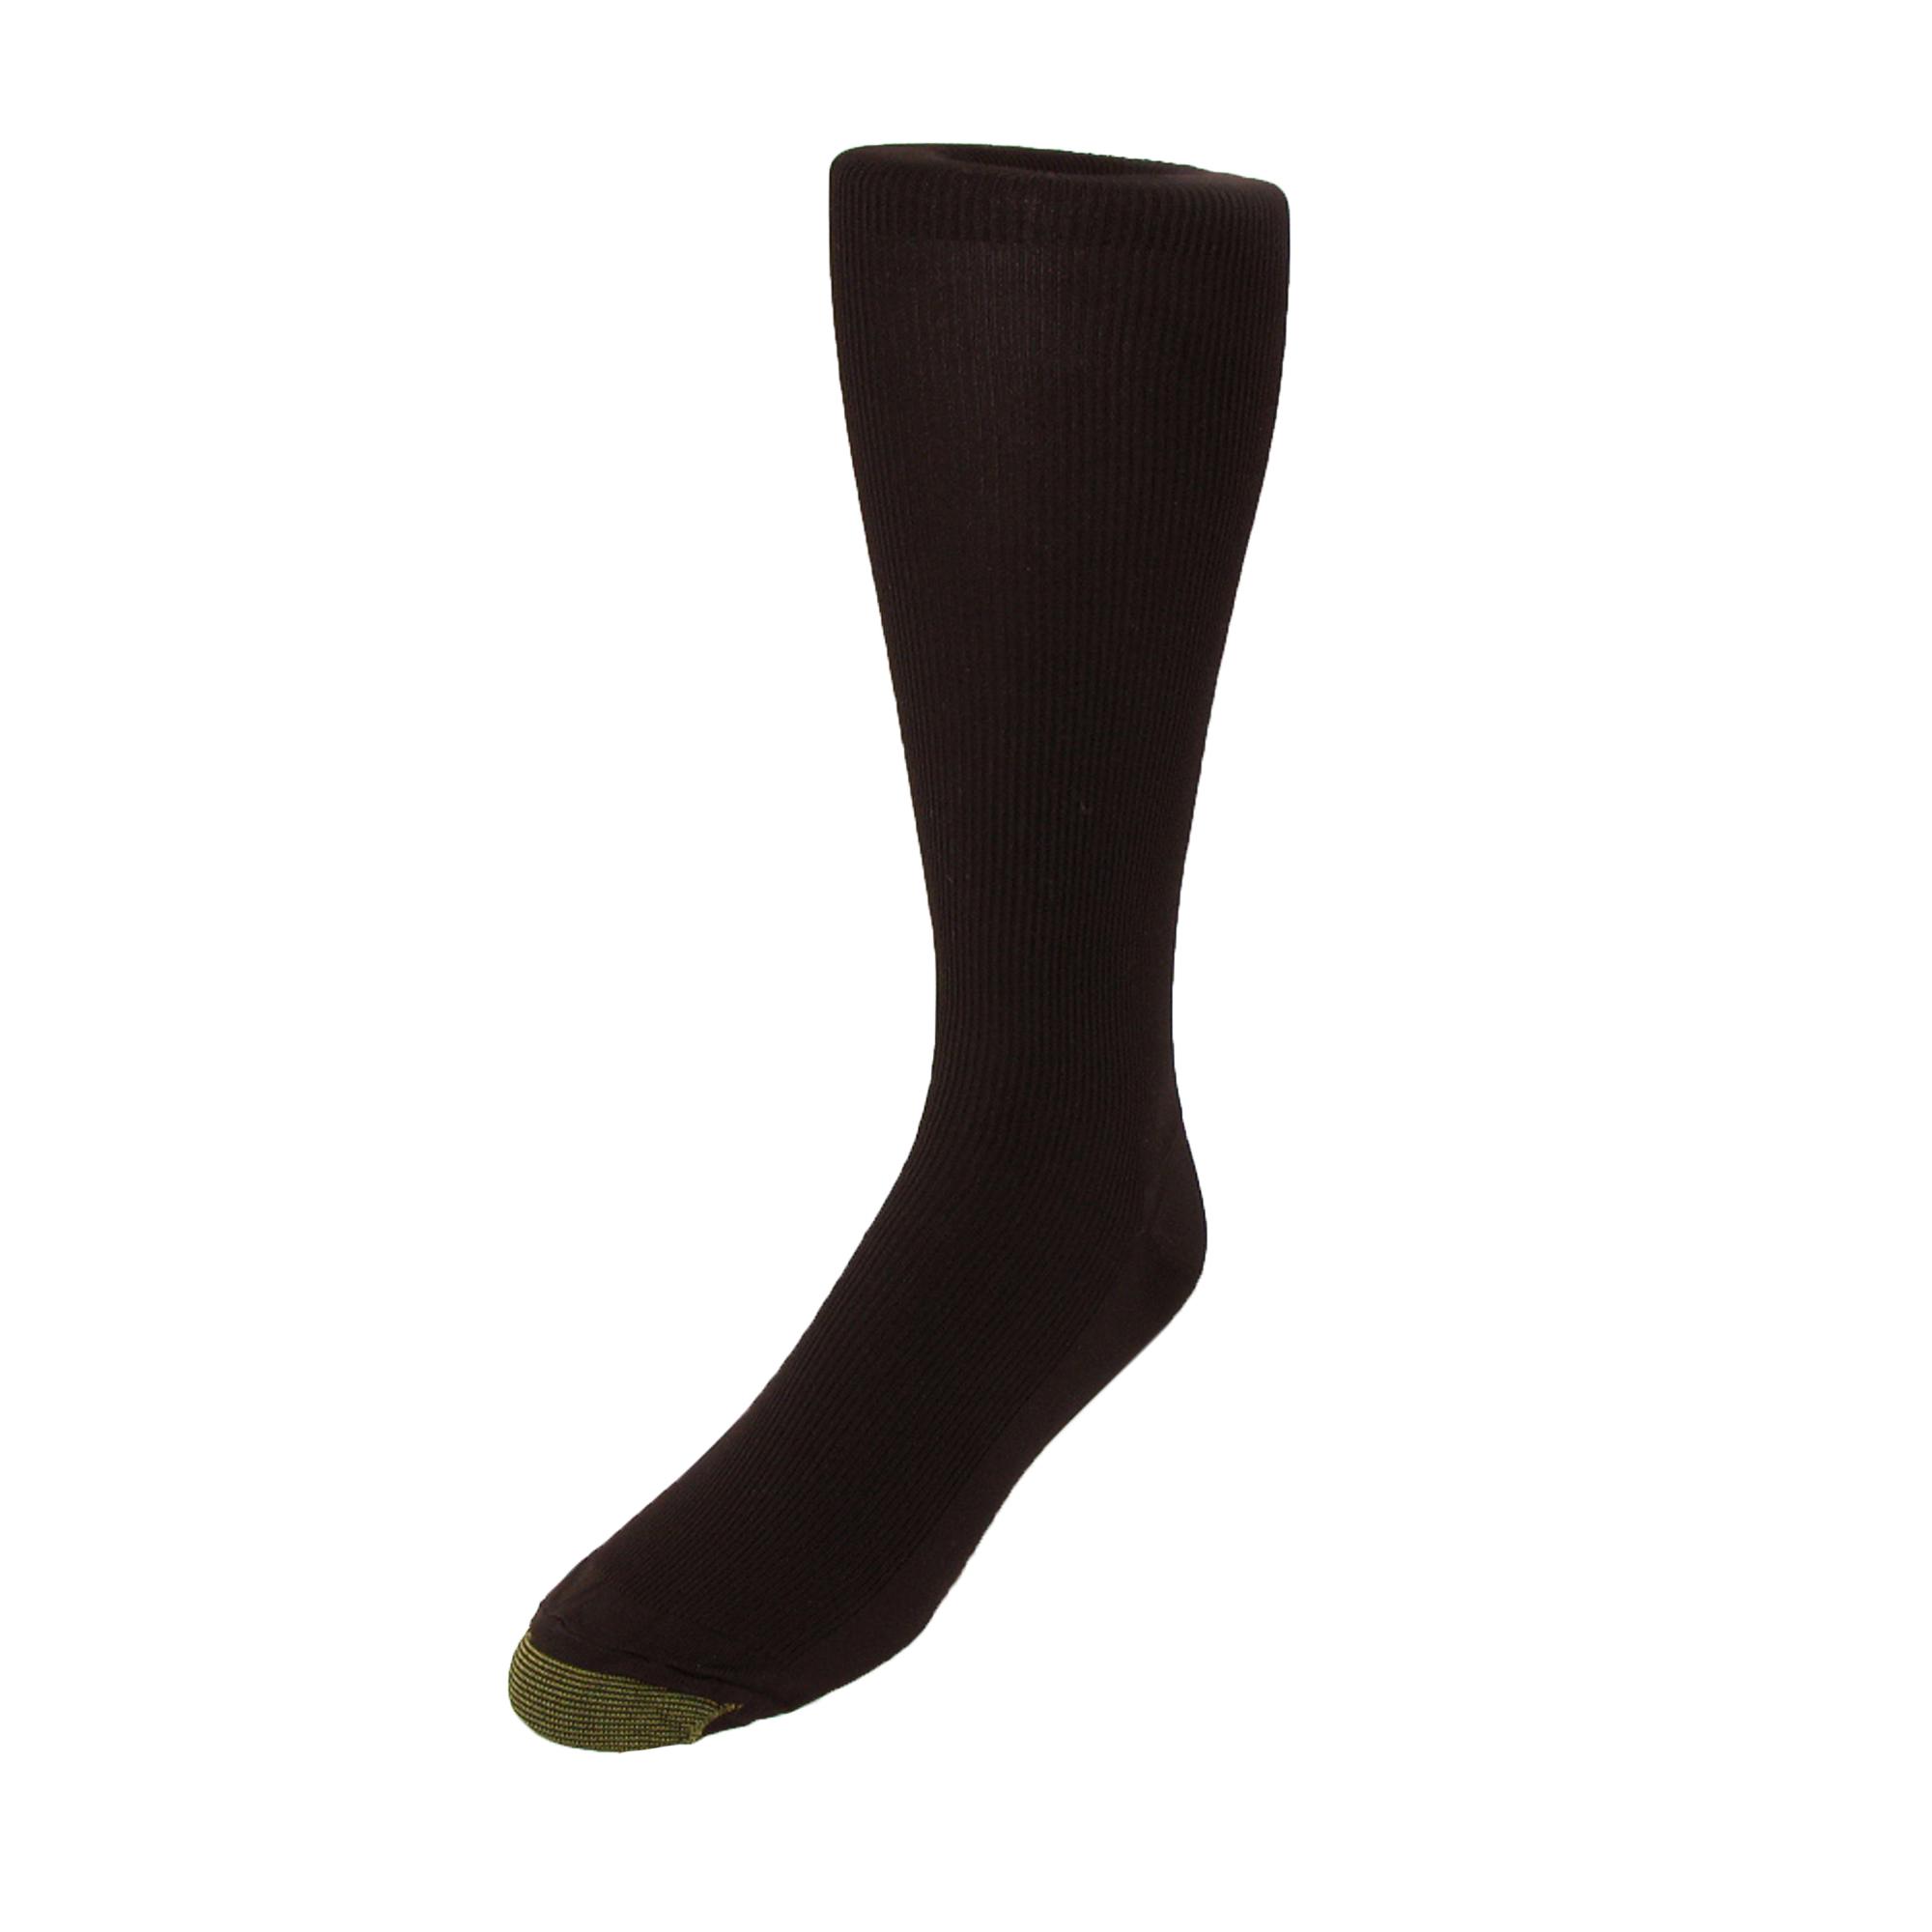 Gold Toe Men's Metropolitan Moisture Control OTC Socks (Pack of 3), Brown